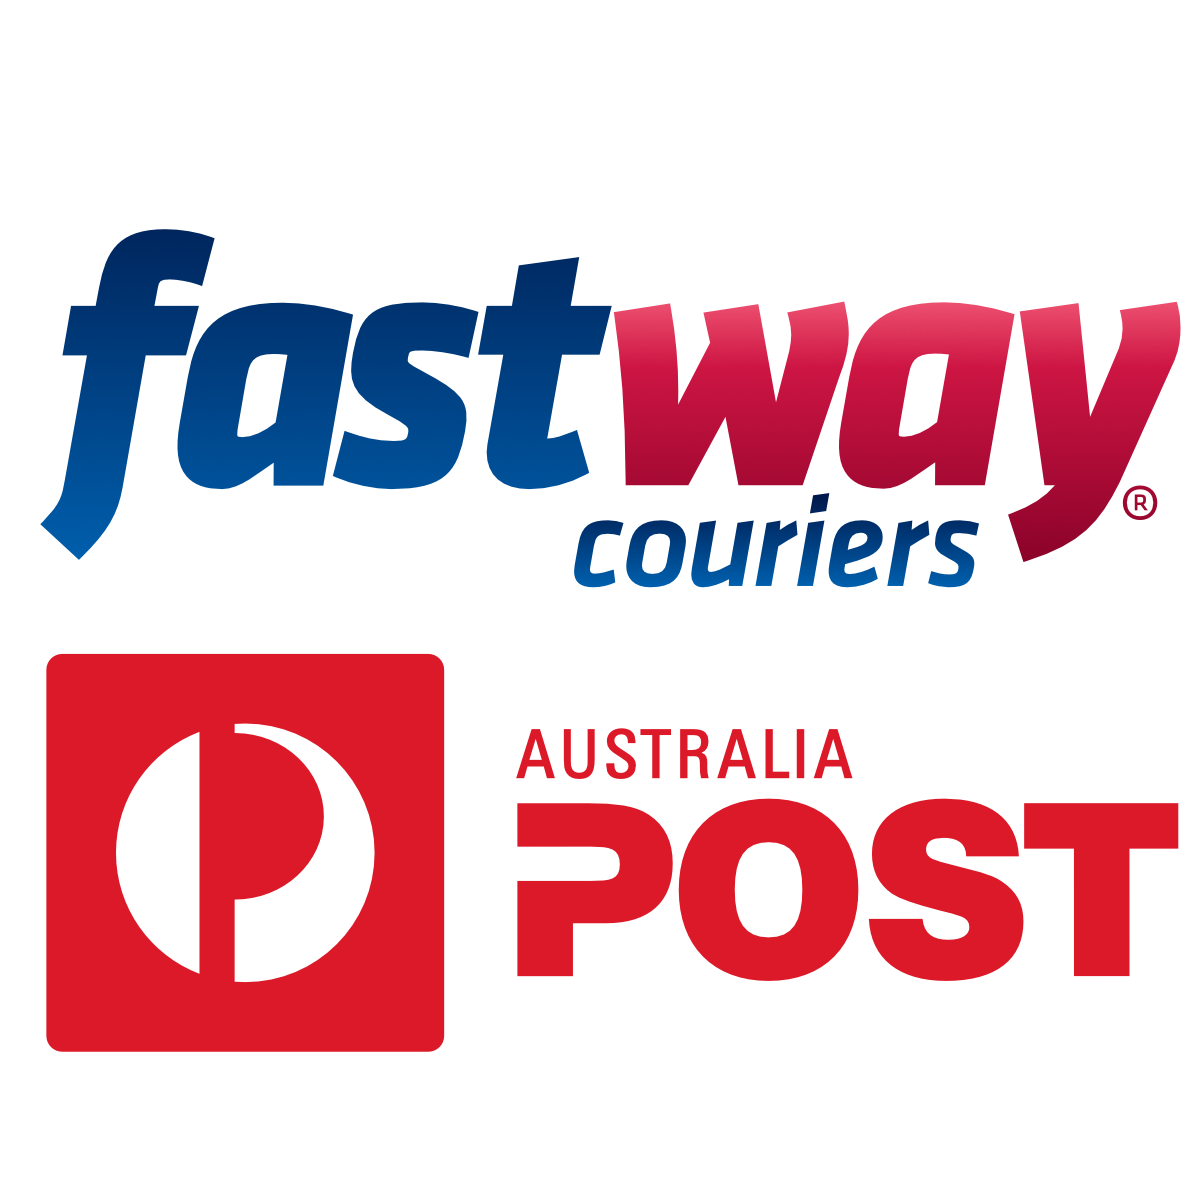 Fastway Australia Post Prices